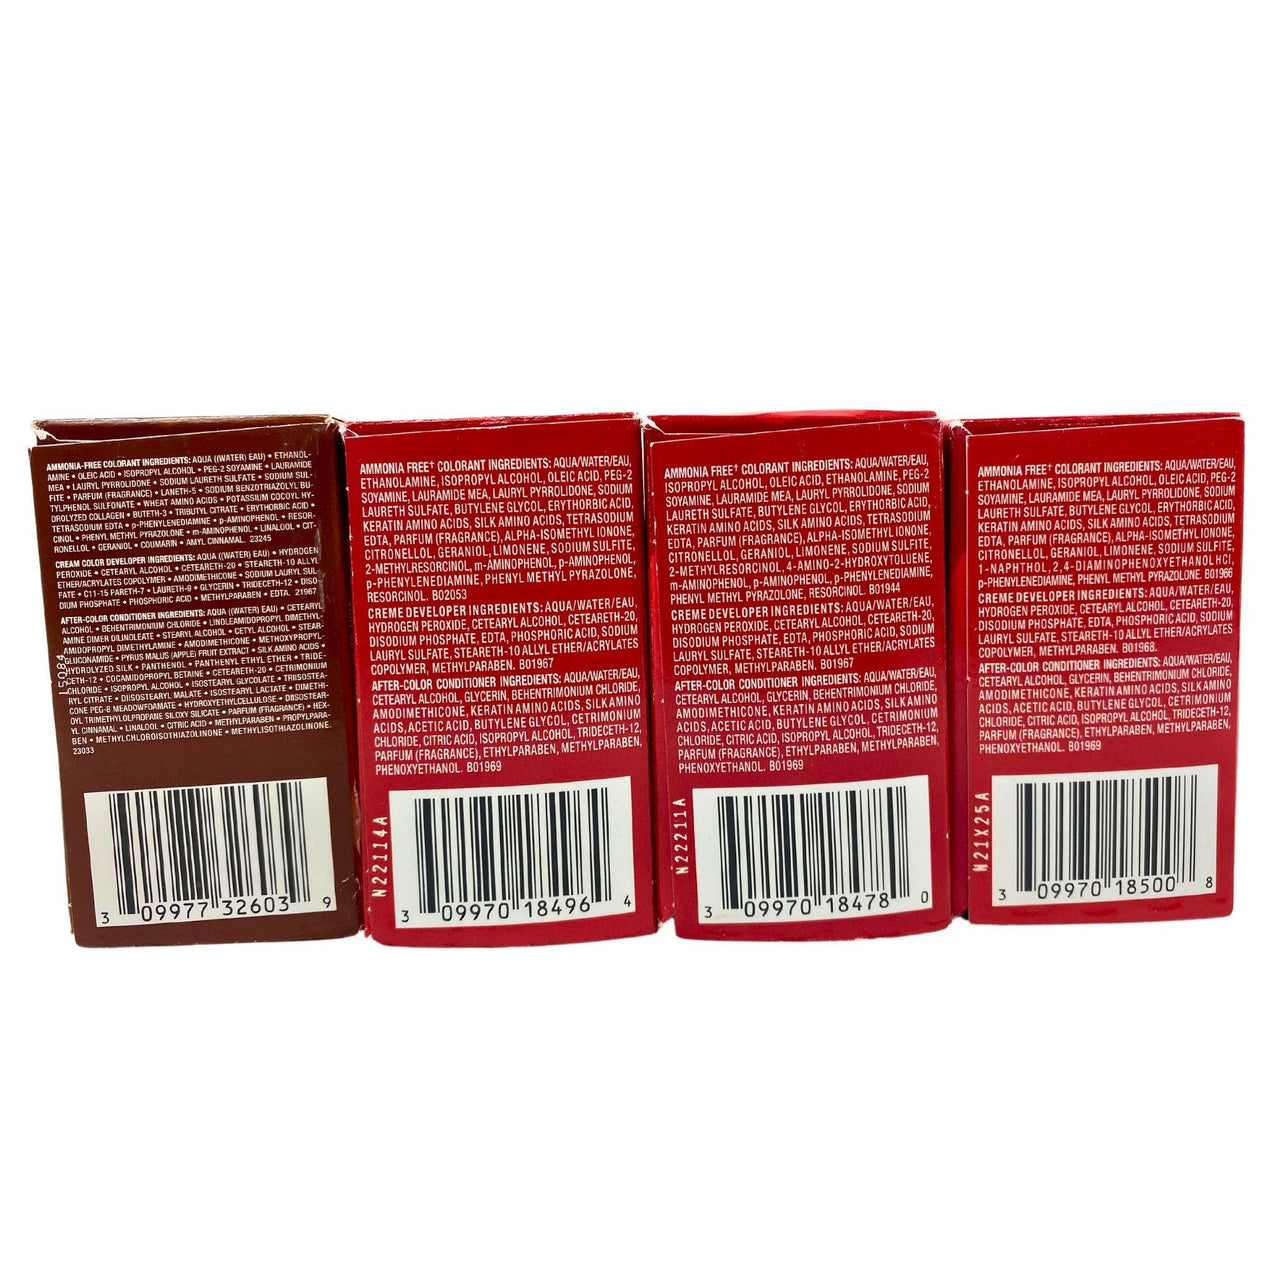 Revlon Colorsilk Beautiiful Color Assorted Mix (70 Pcs Lot) - Discount Wholesalers Inc